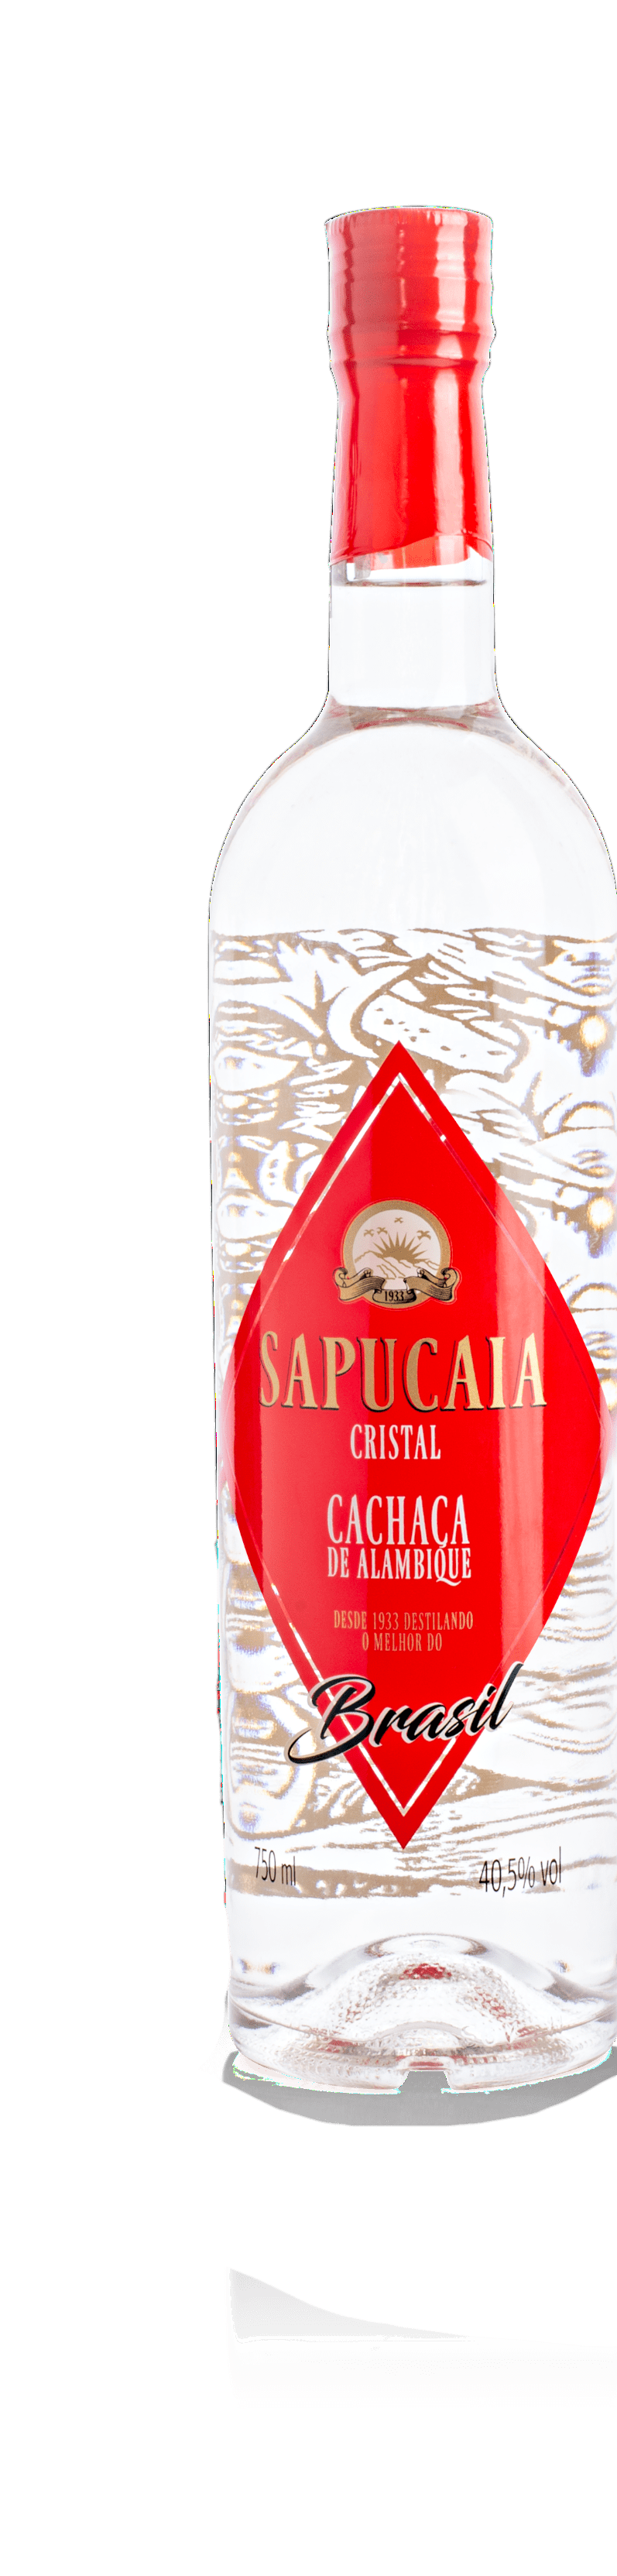 Cachaça Sapucaia Cristal 750 ml